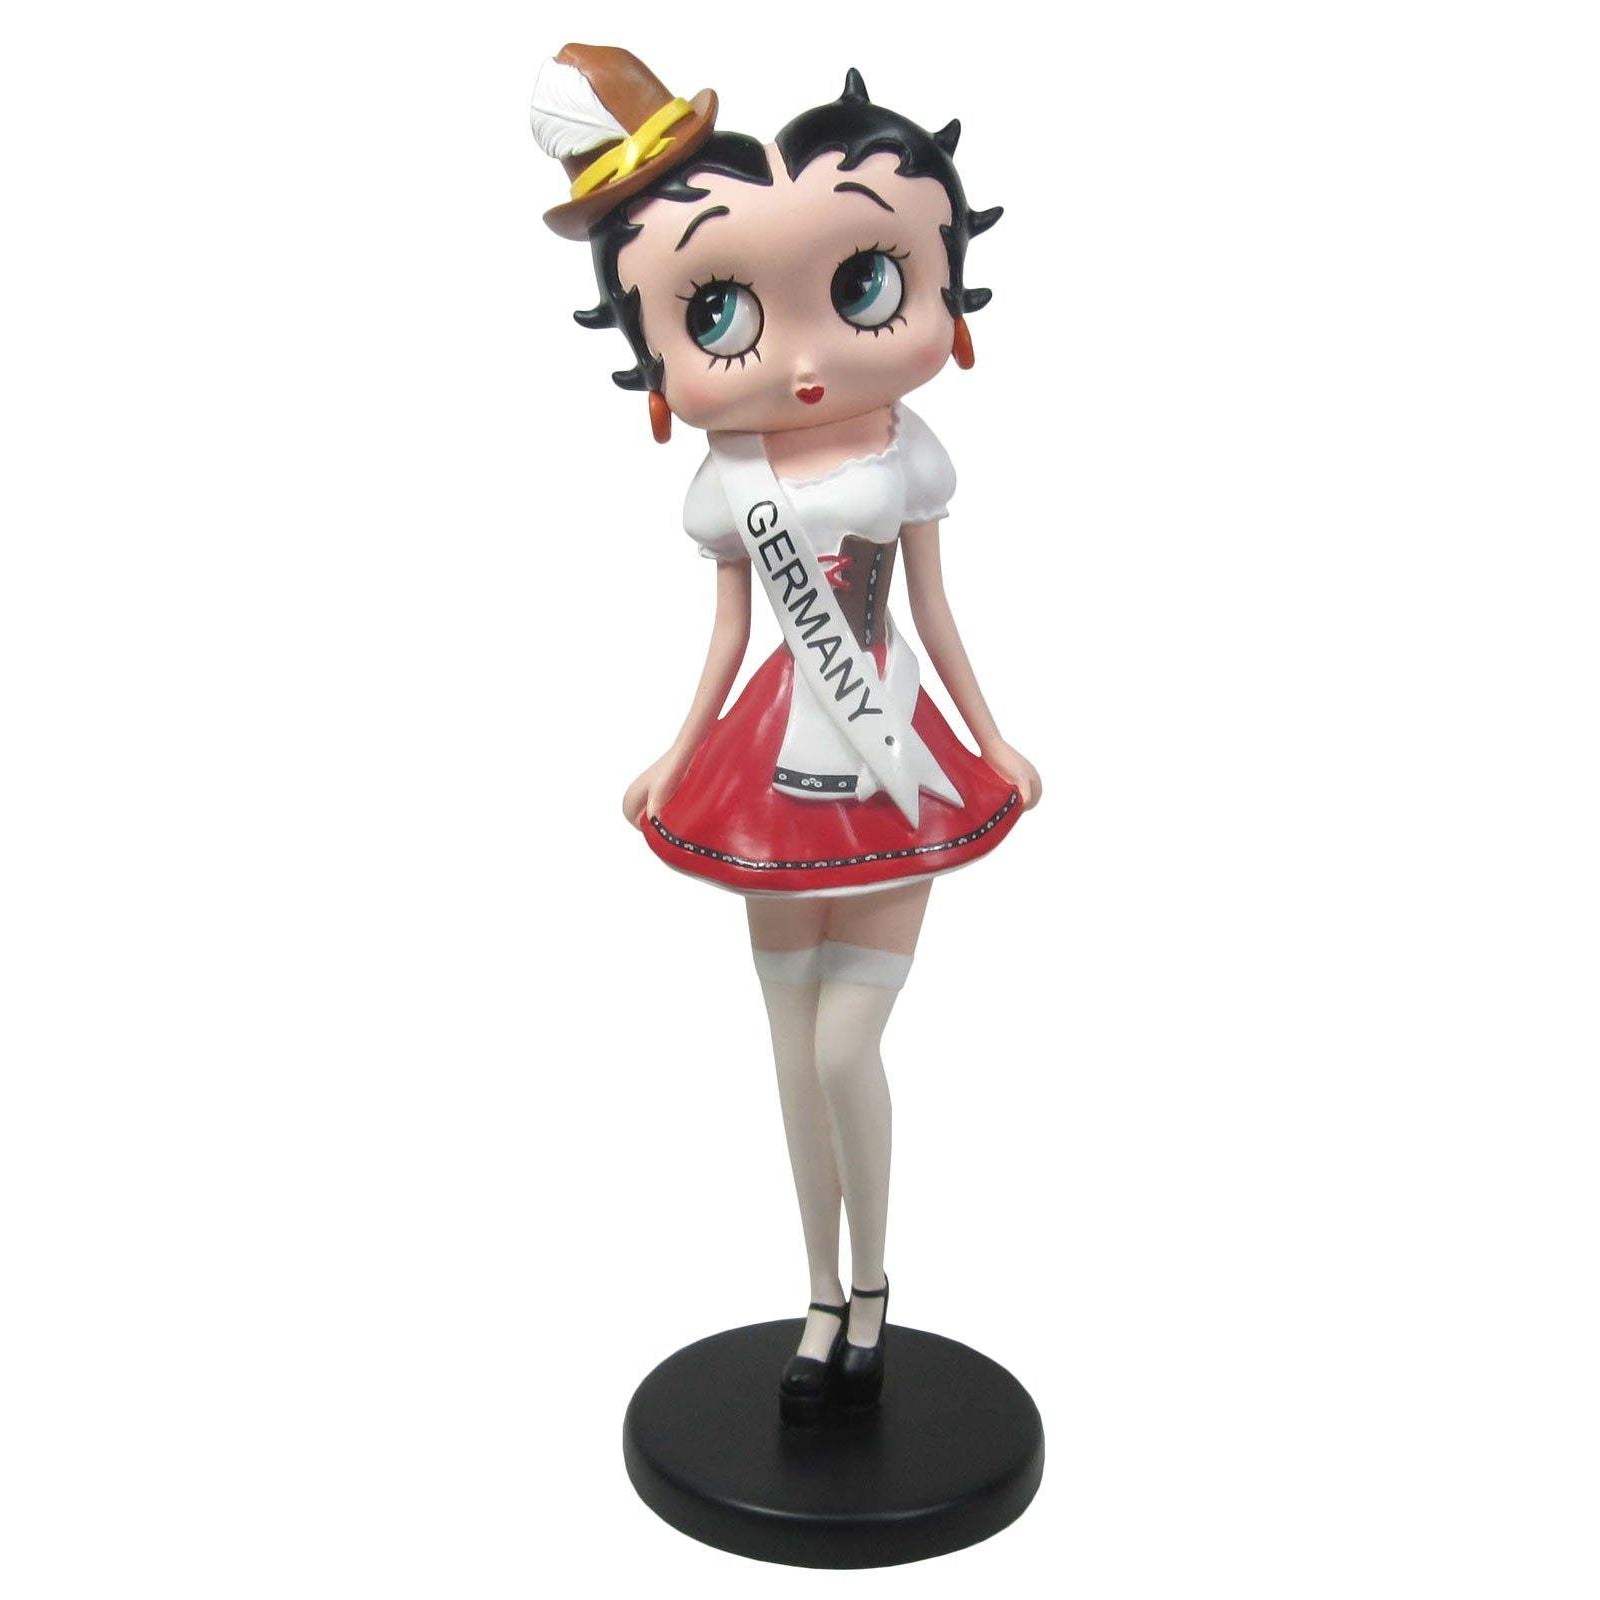 Betty Boop In German Costume (Betty Boop) - Gallery Gifts Online 